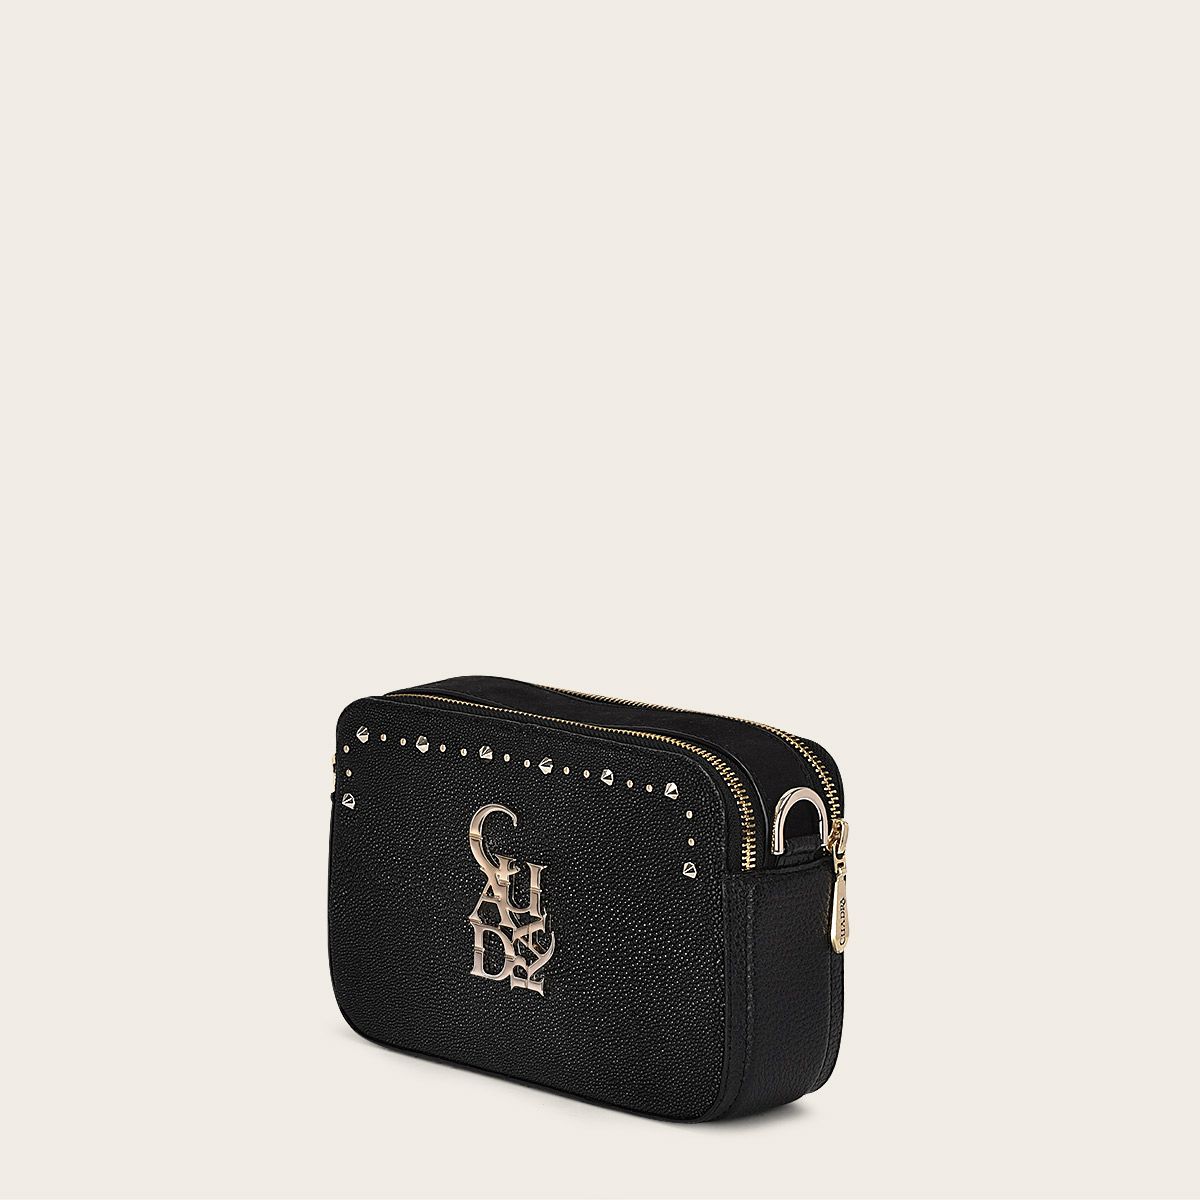 Black exotic leather crossbody bag